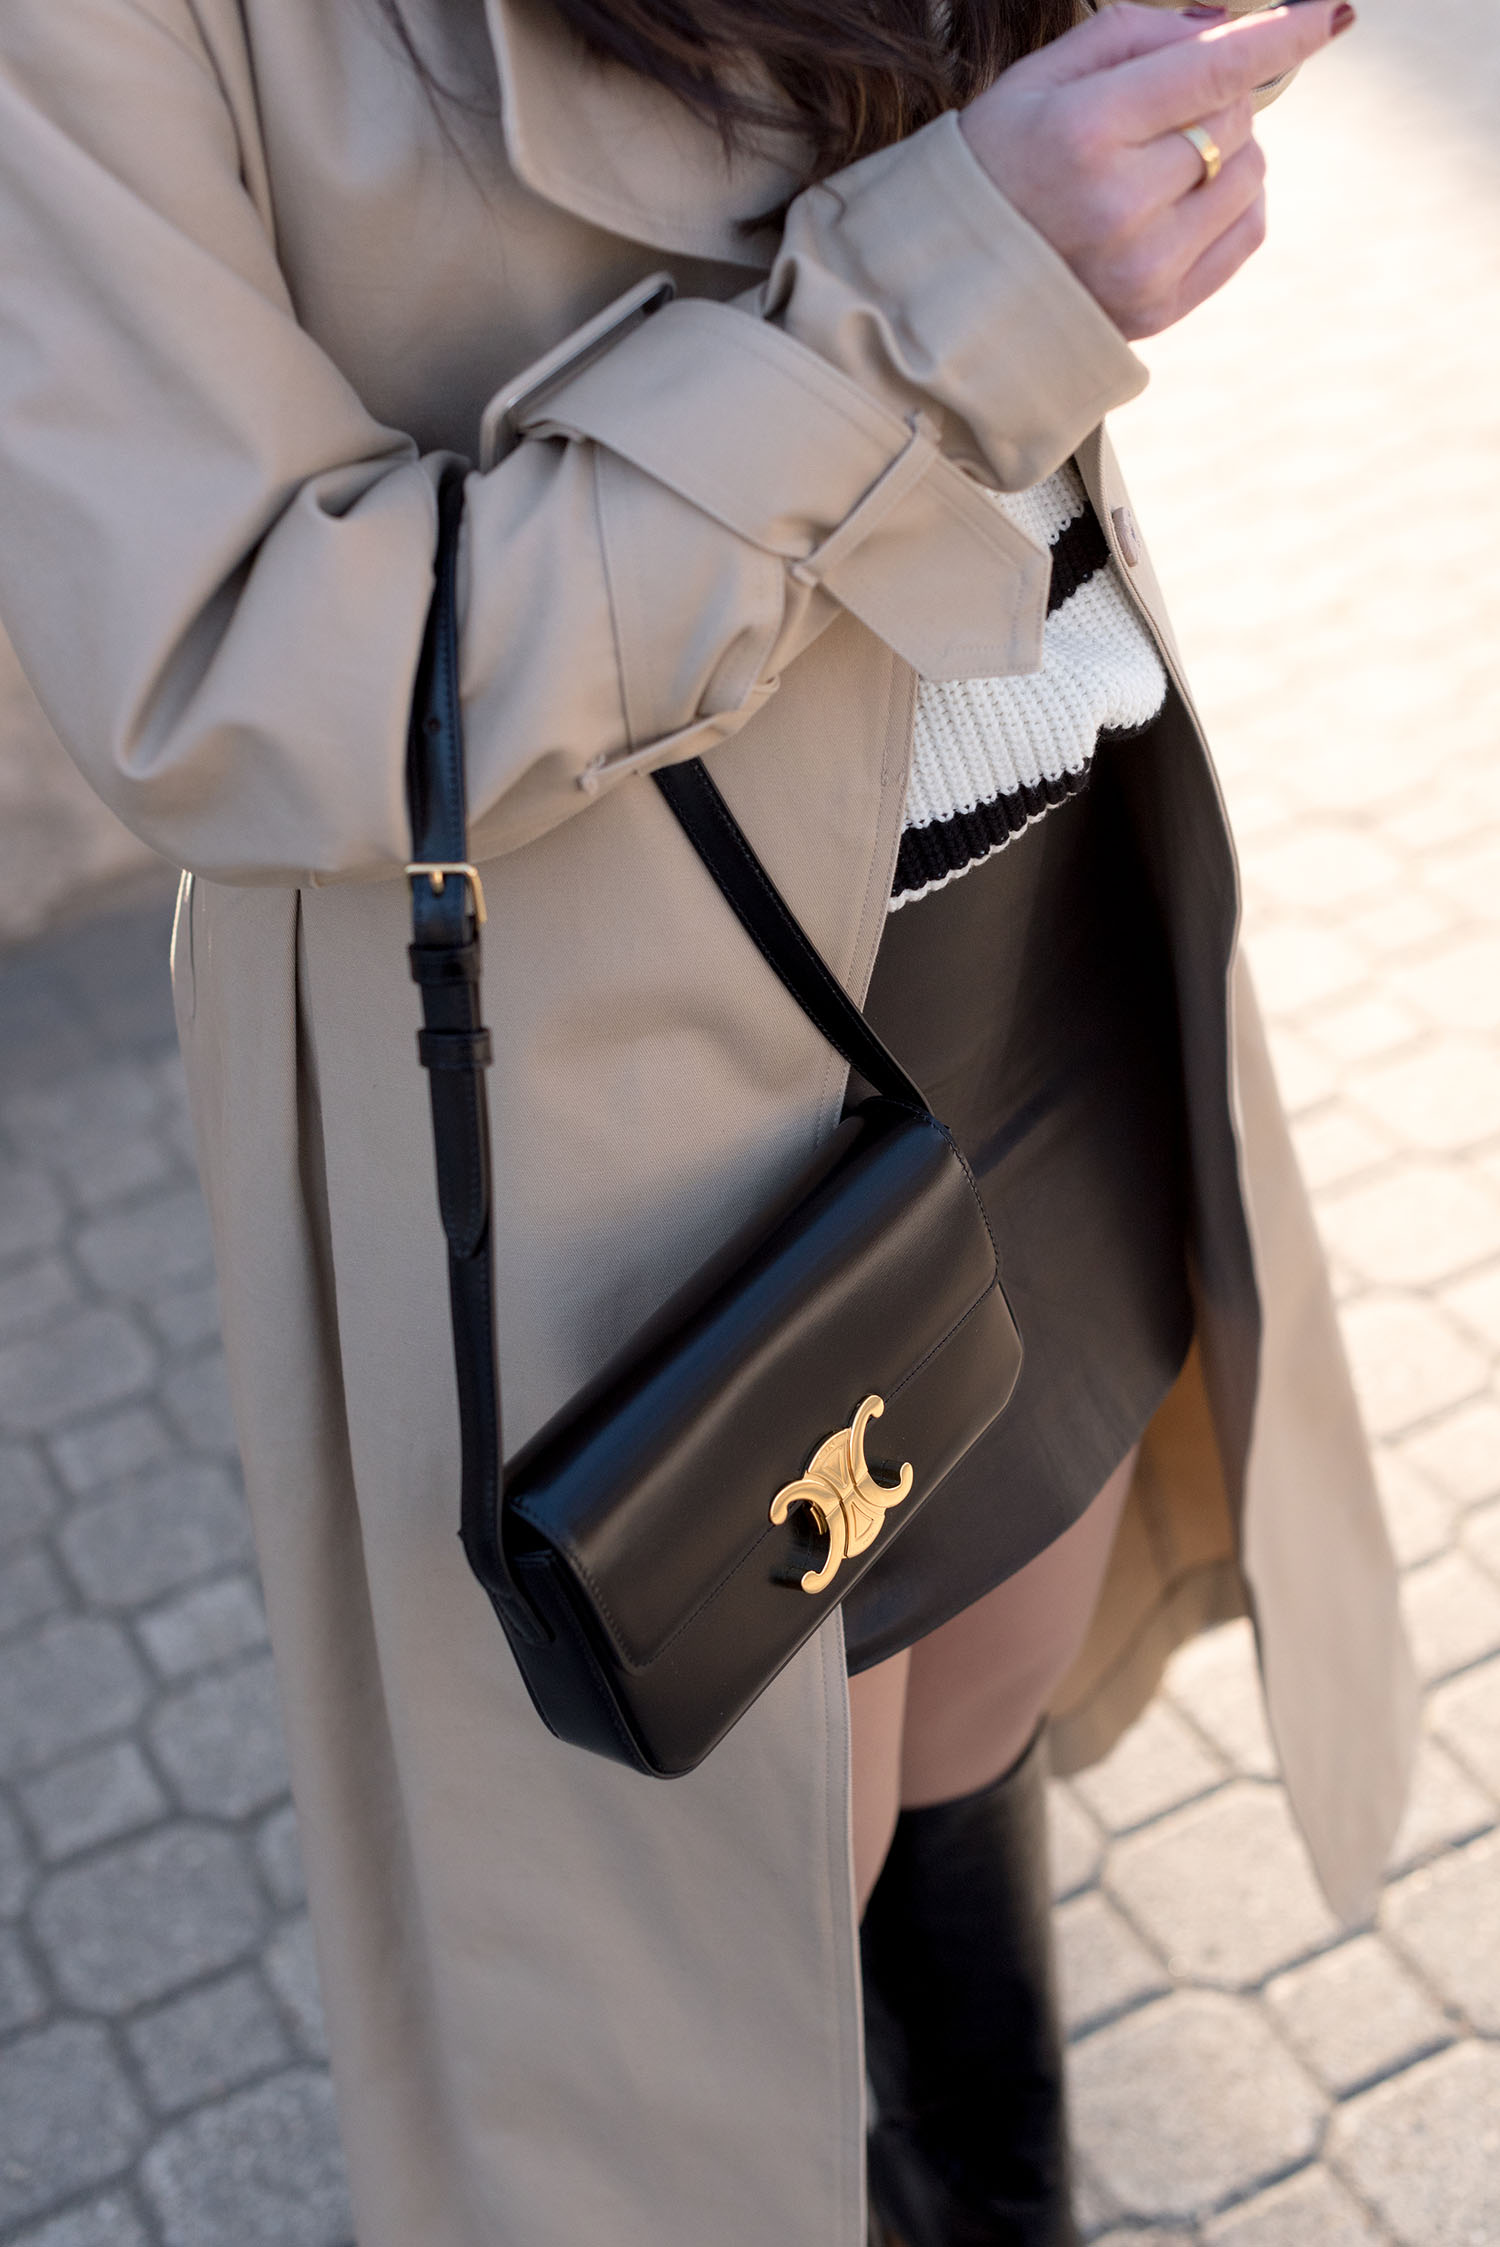 Coco & Vera - Celine Triomphe handbag, H&M trench, Sezane miniskirt